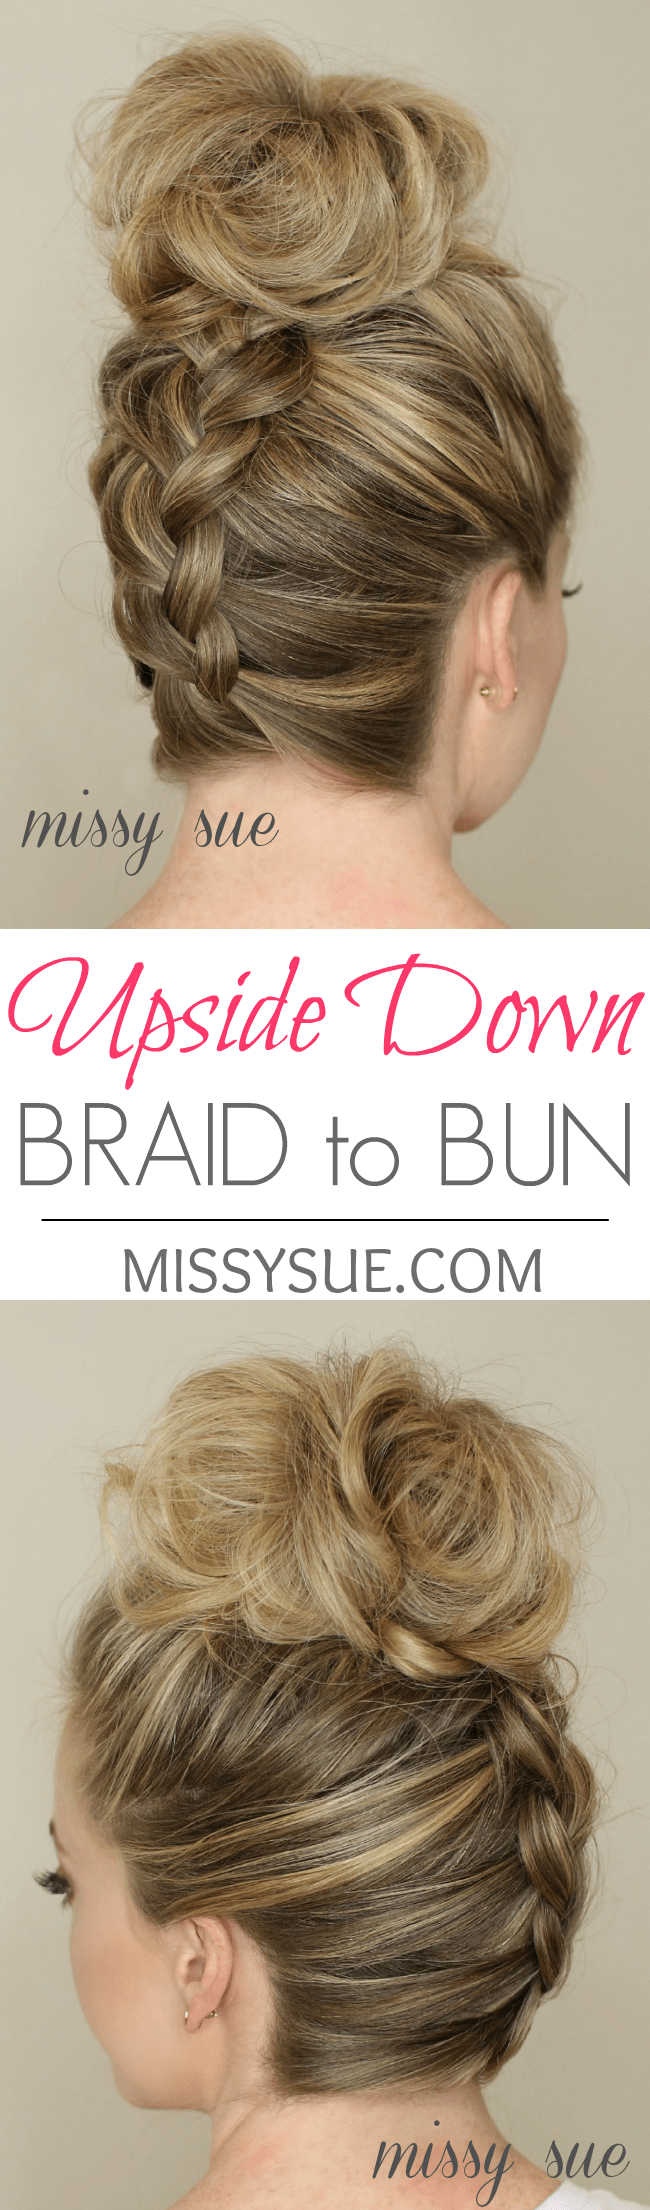 Upside Down Braid to Bun | MissySue.com